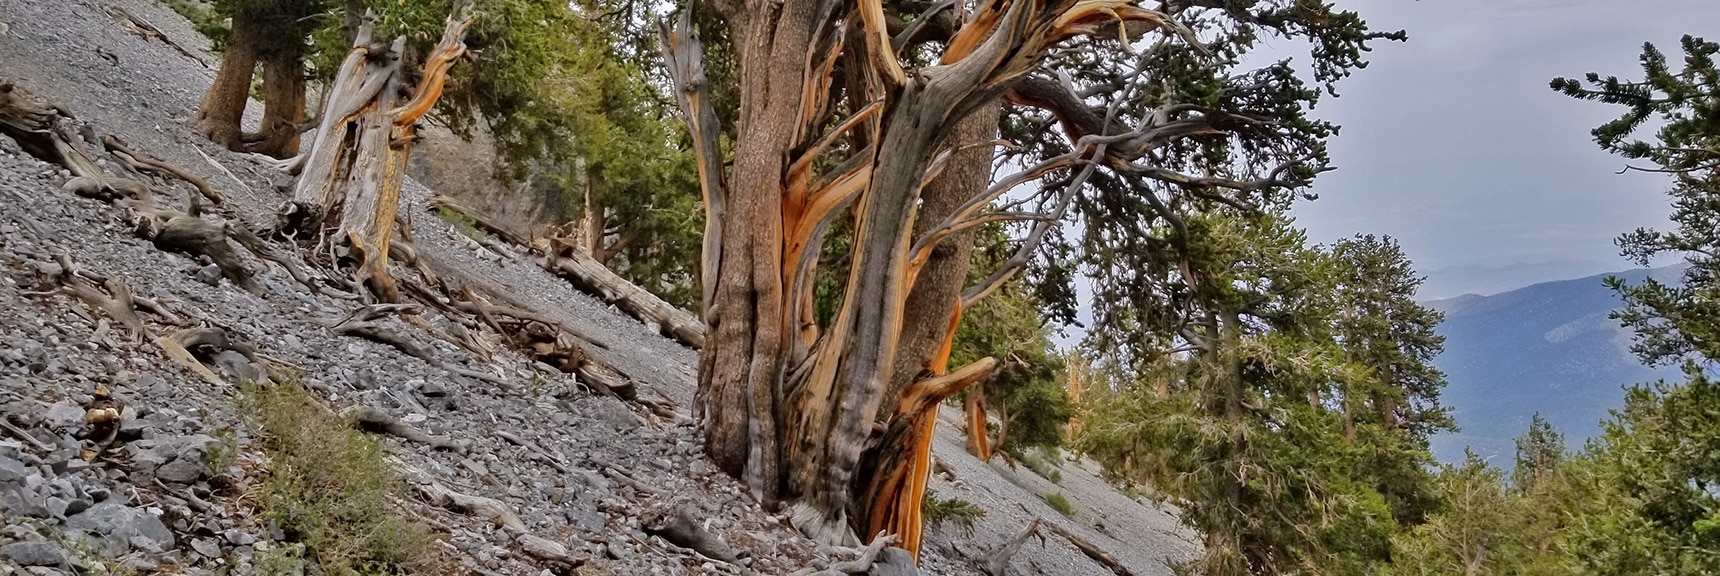 Impressive Ancient Bristlecone Pines Growing on the Avalanche Slope Below the NE Cliff Descent Chute. | Mummy Mountain NE Cliffs Descent | Mt Charleston Wilderness | Spring Mountains, Nevada